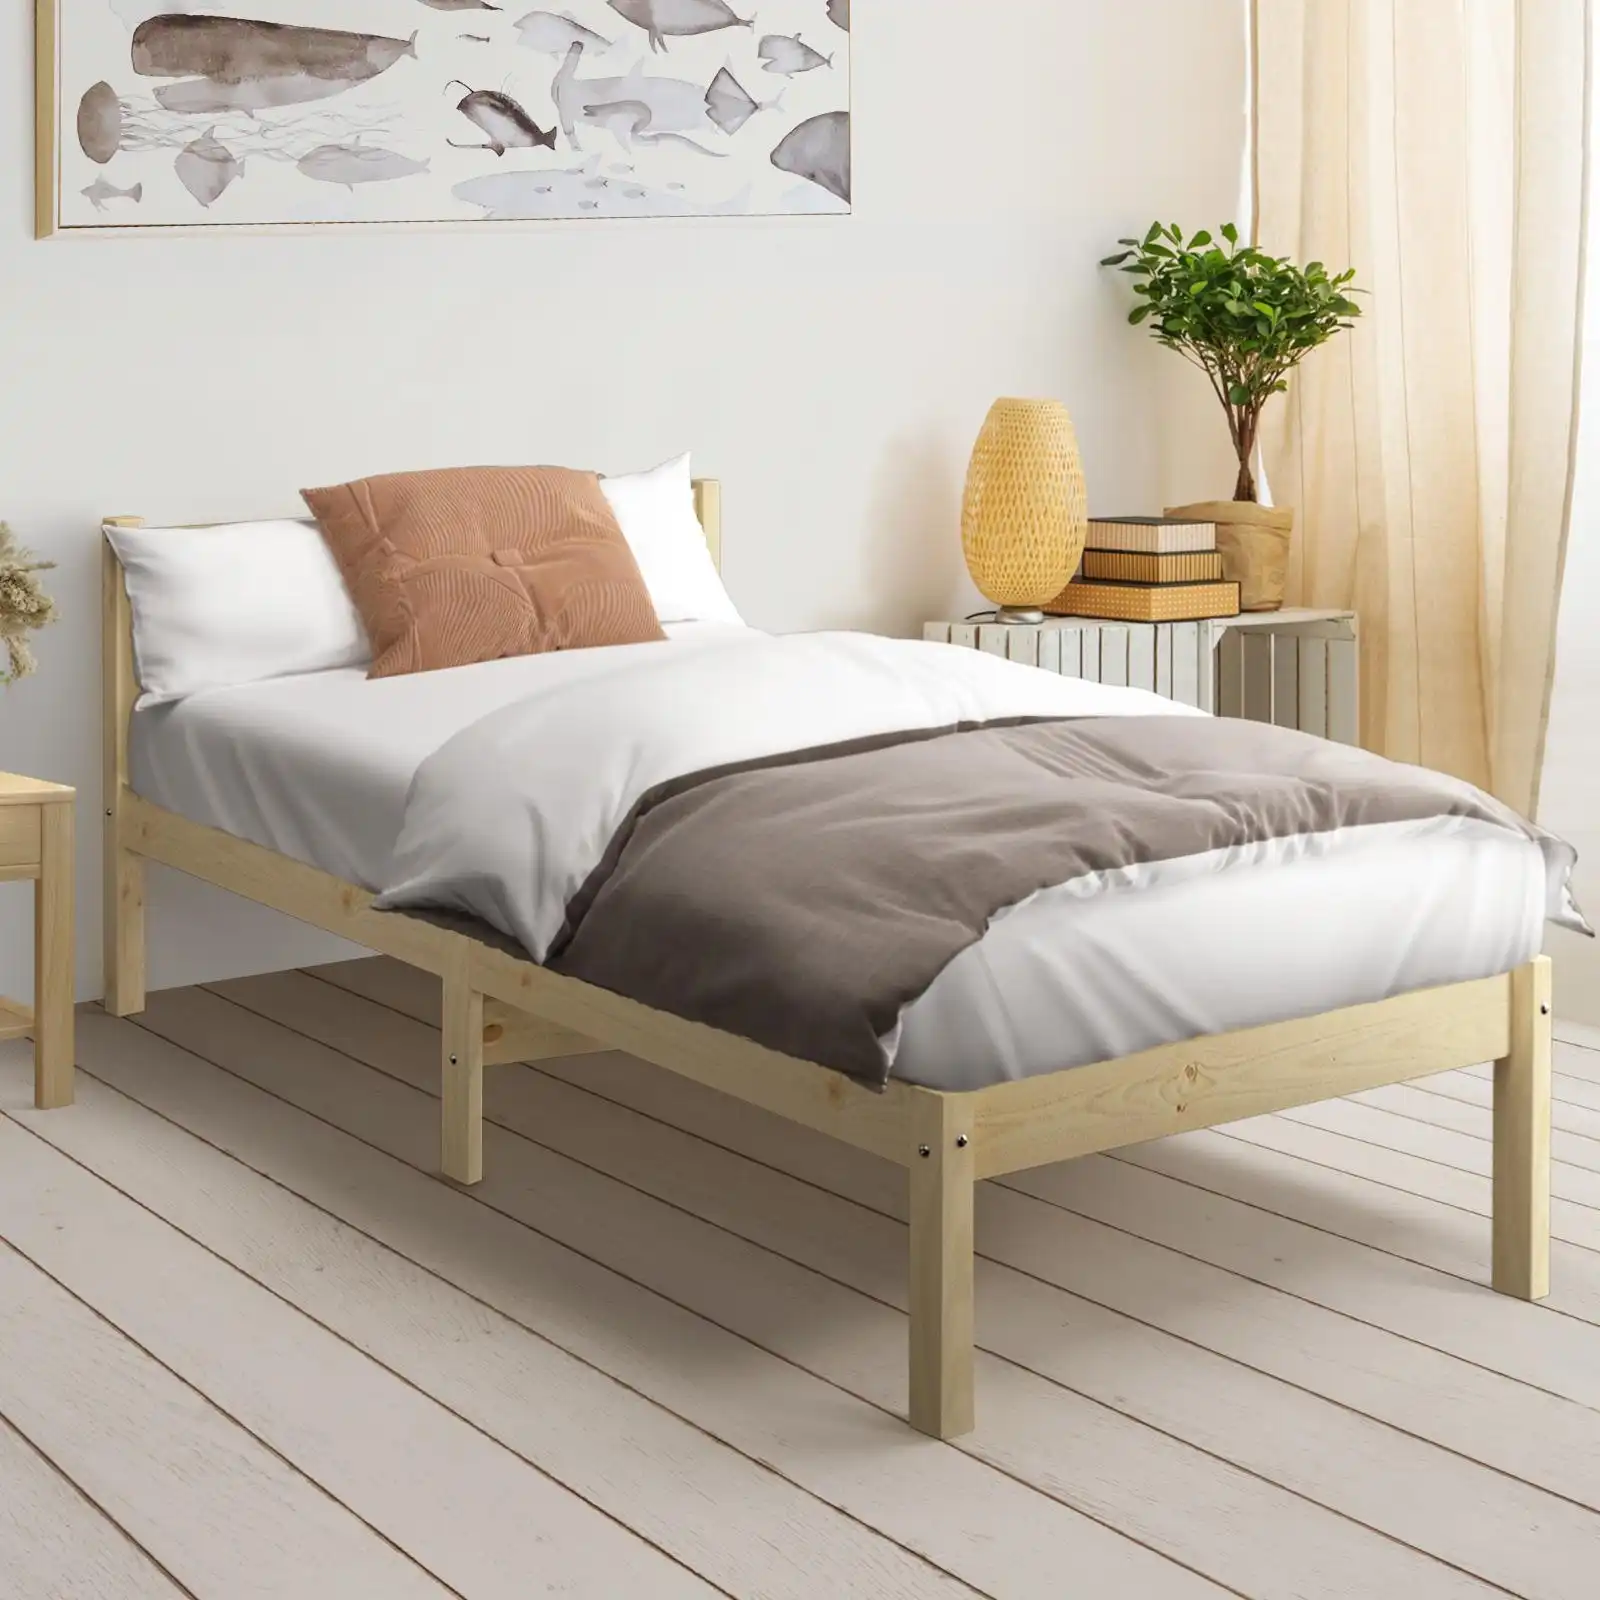 Oikiture Bed Frame King Single Size Wood Timber Mattress Base Platform Headboard